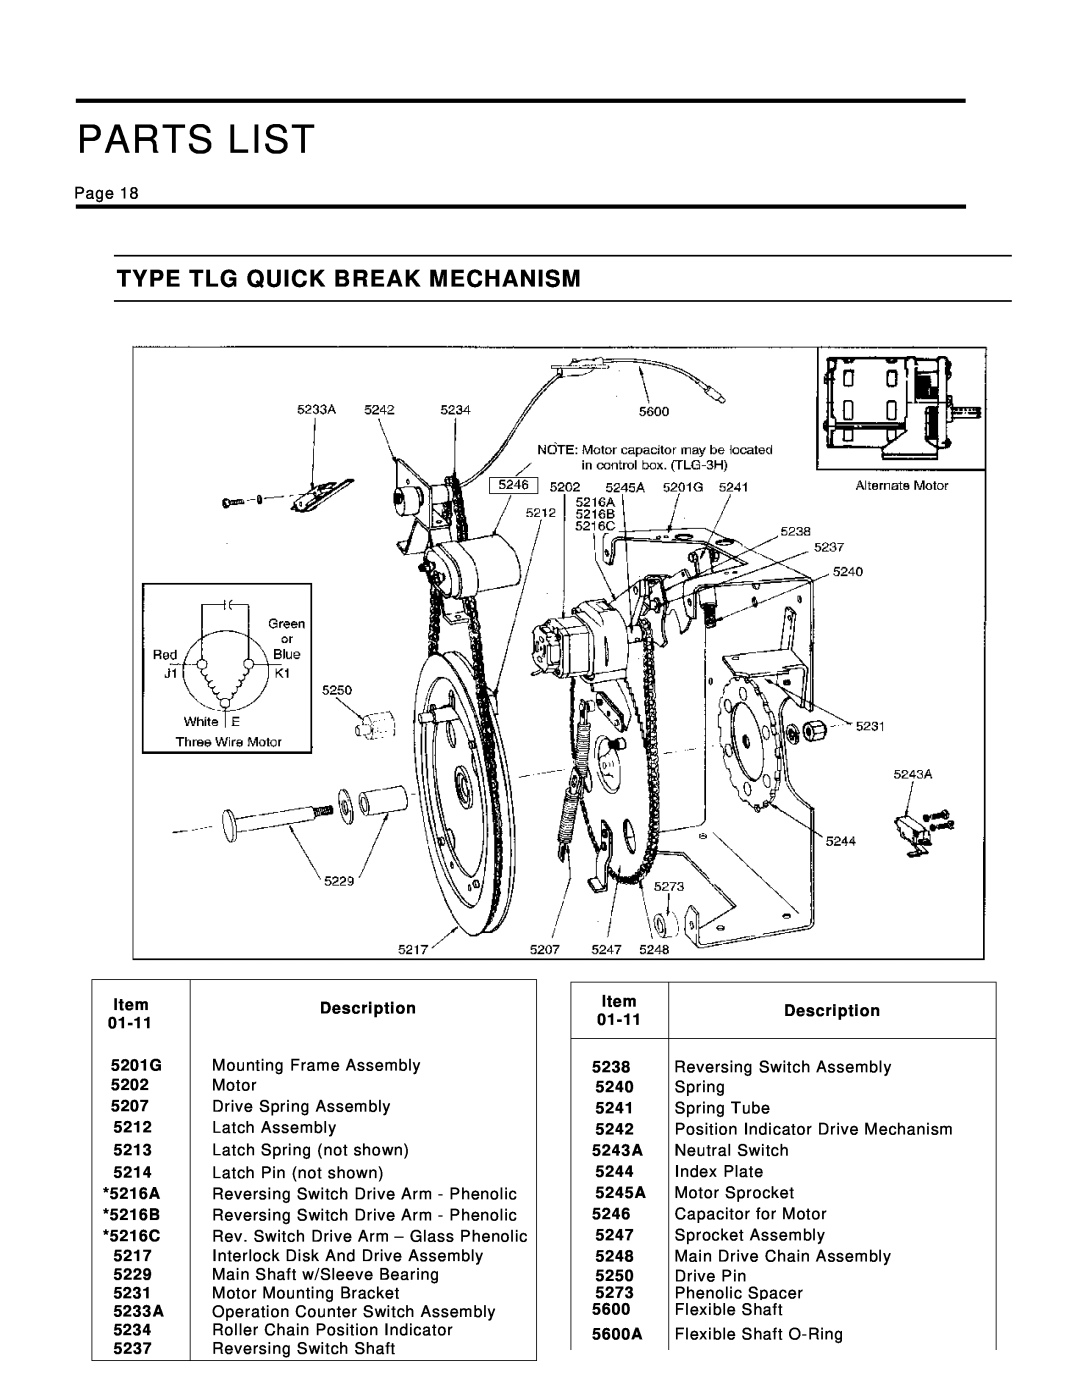 Siemens 21-115532-001 manual Type Tlg Quick Break Mechanism, Parts List 